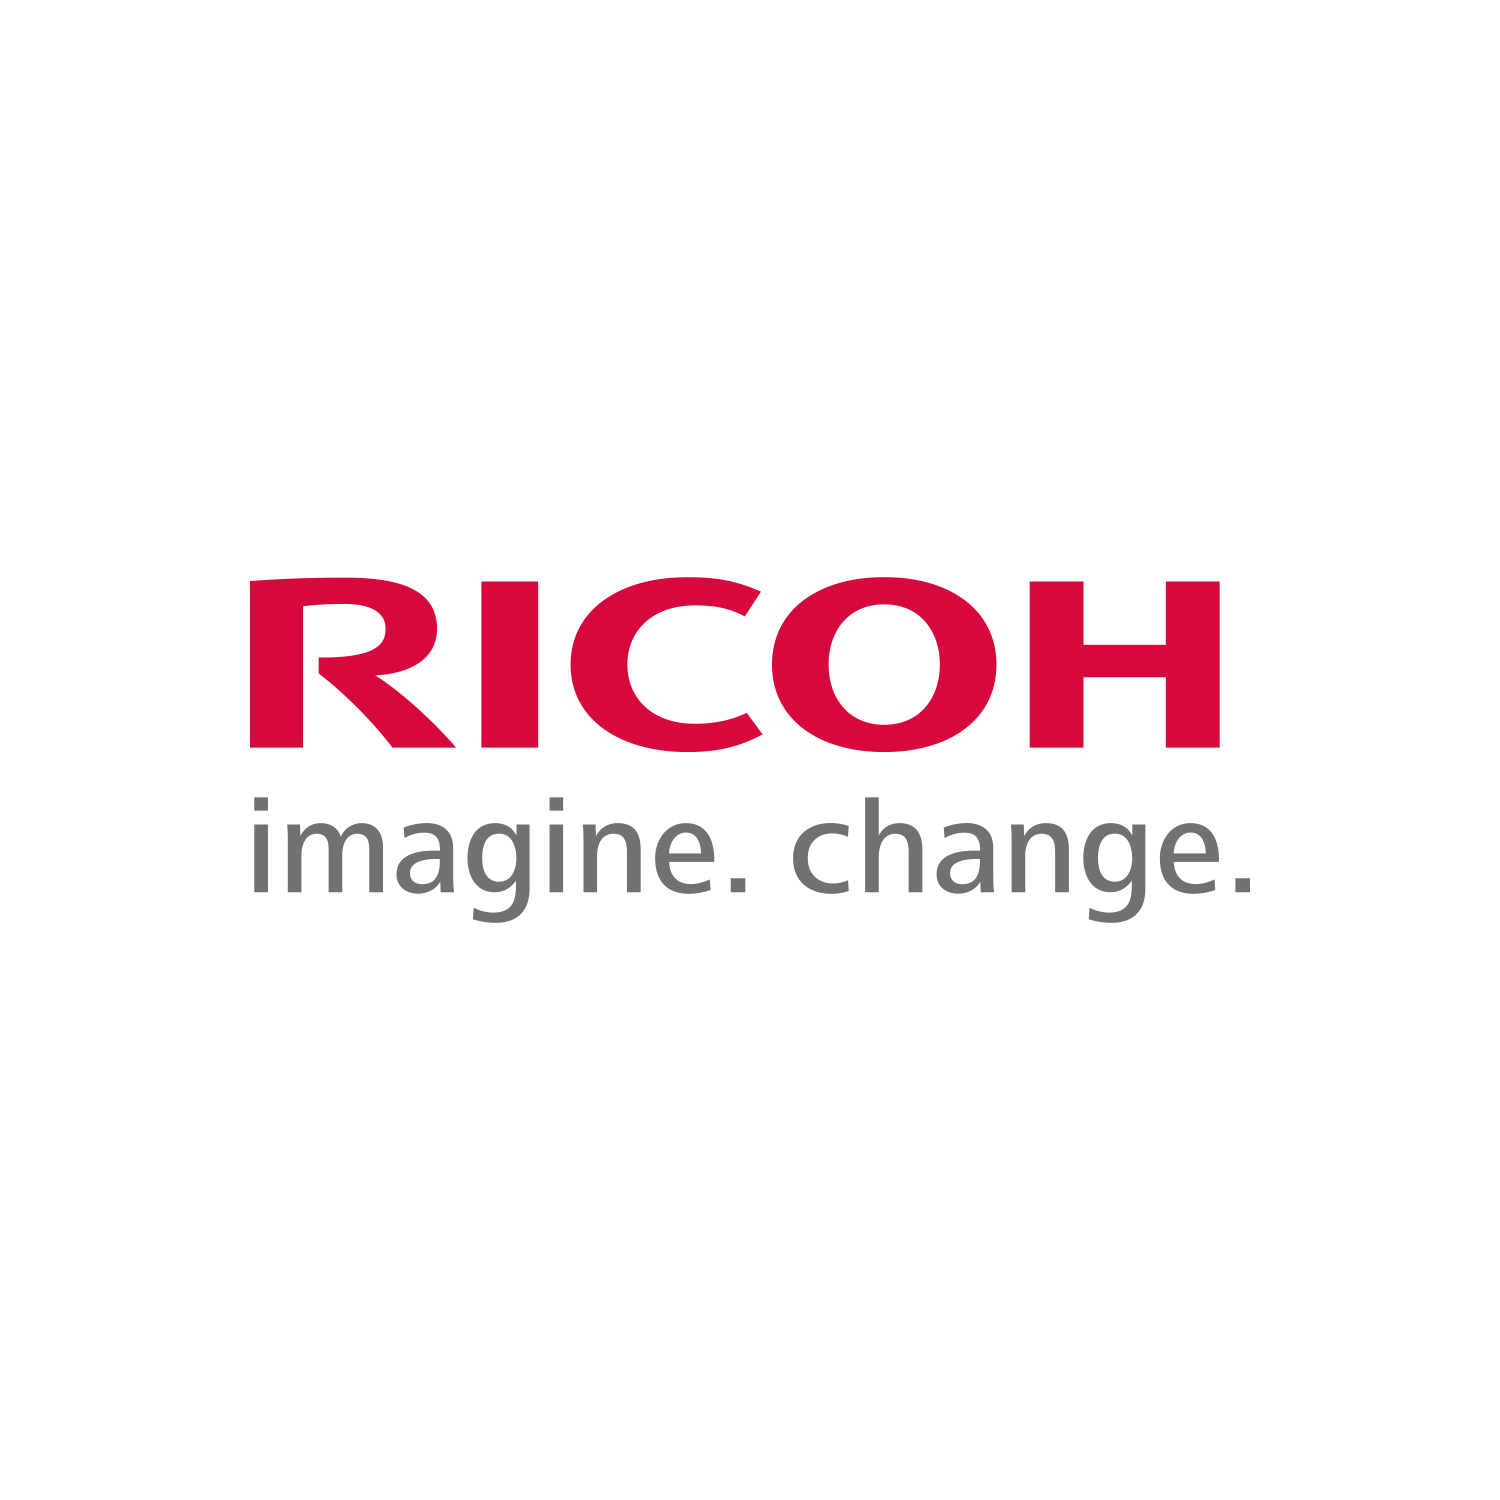 Ricoh Global | Fulfillment through Work